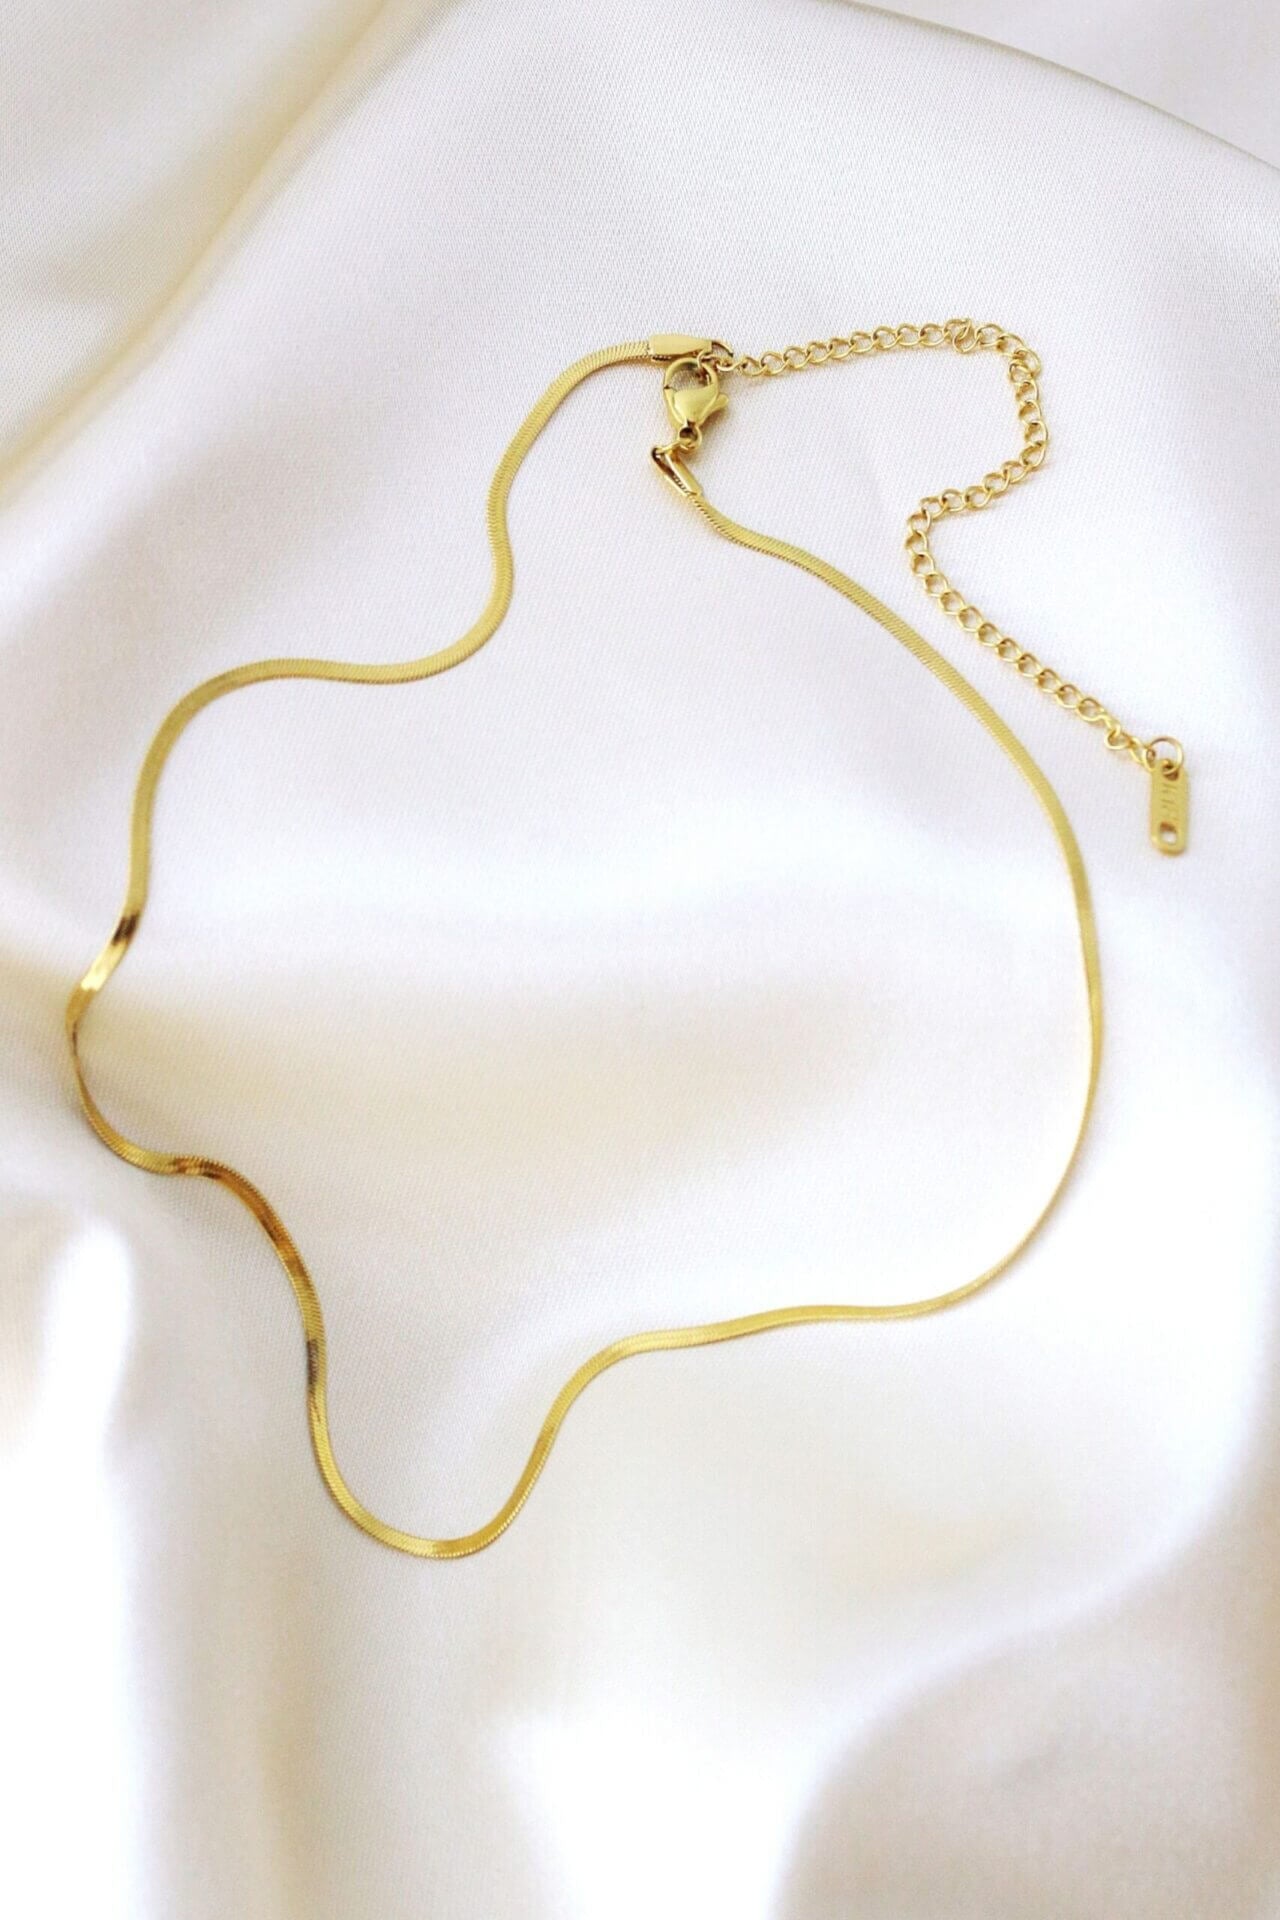 18 Karat Gold Plated Flat Chain Choker Necklace - Handmade, Hypoallergenic, Adjustable Length Bijou Her